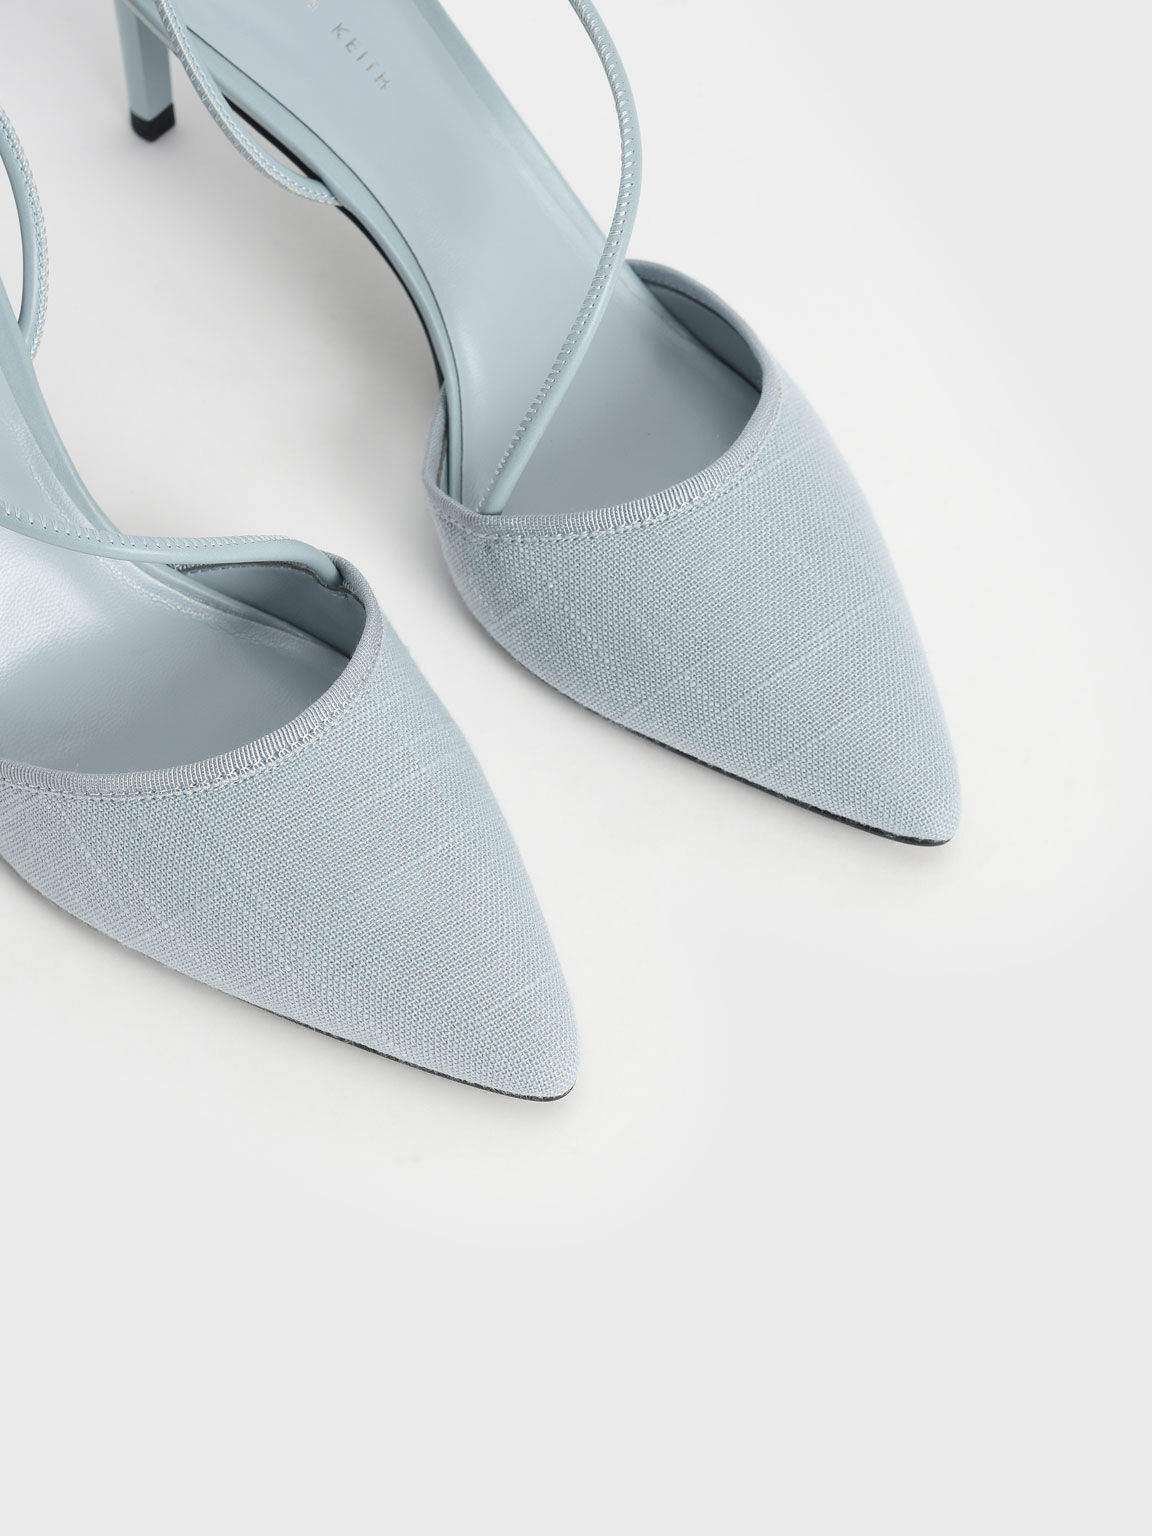 Zapatos de Tacón Asimétricos de Lino, Light Blue, hi-res